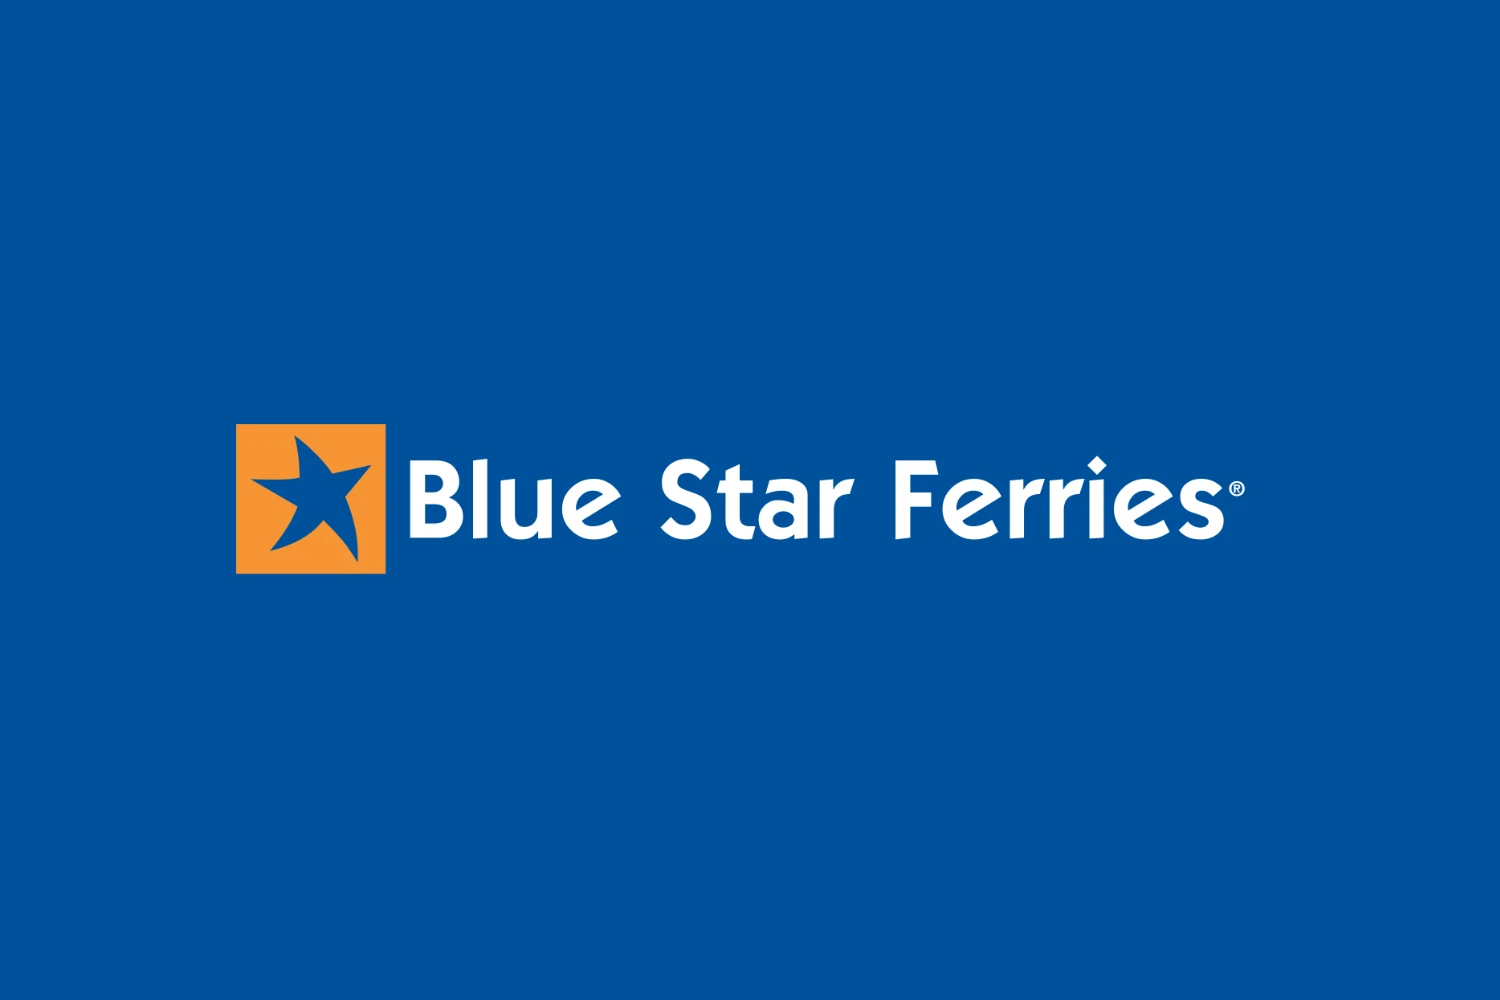 Blue Star Ferries Logo